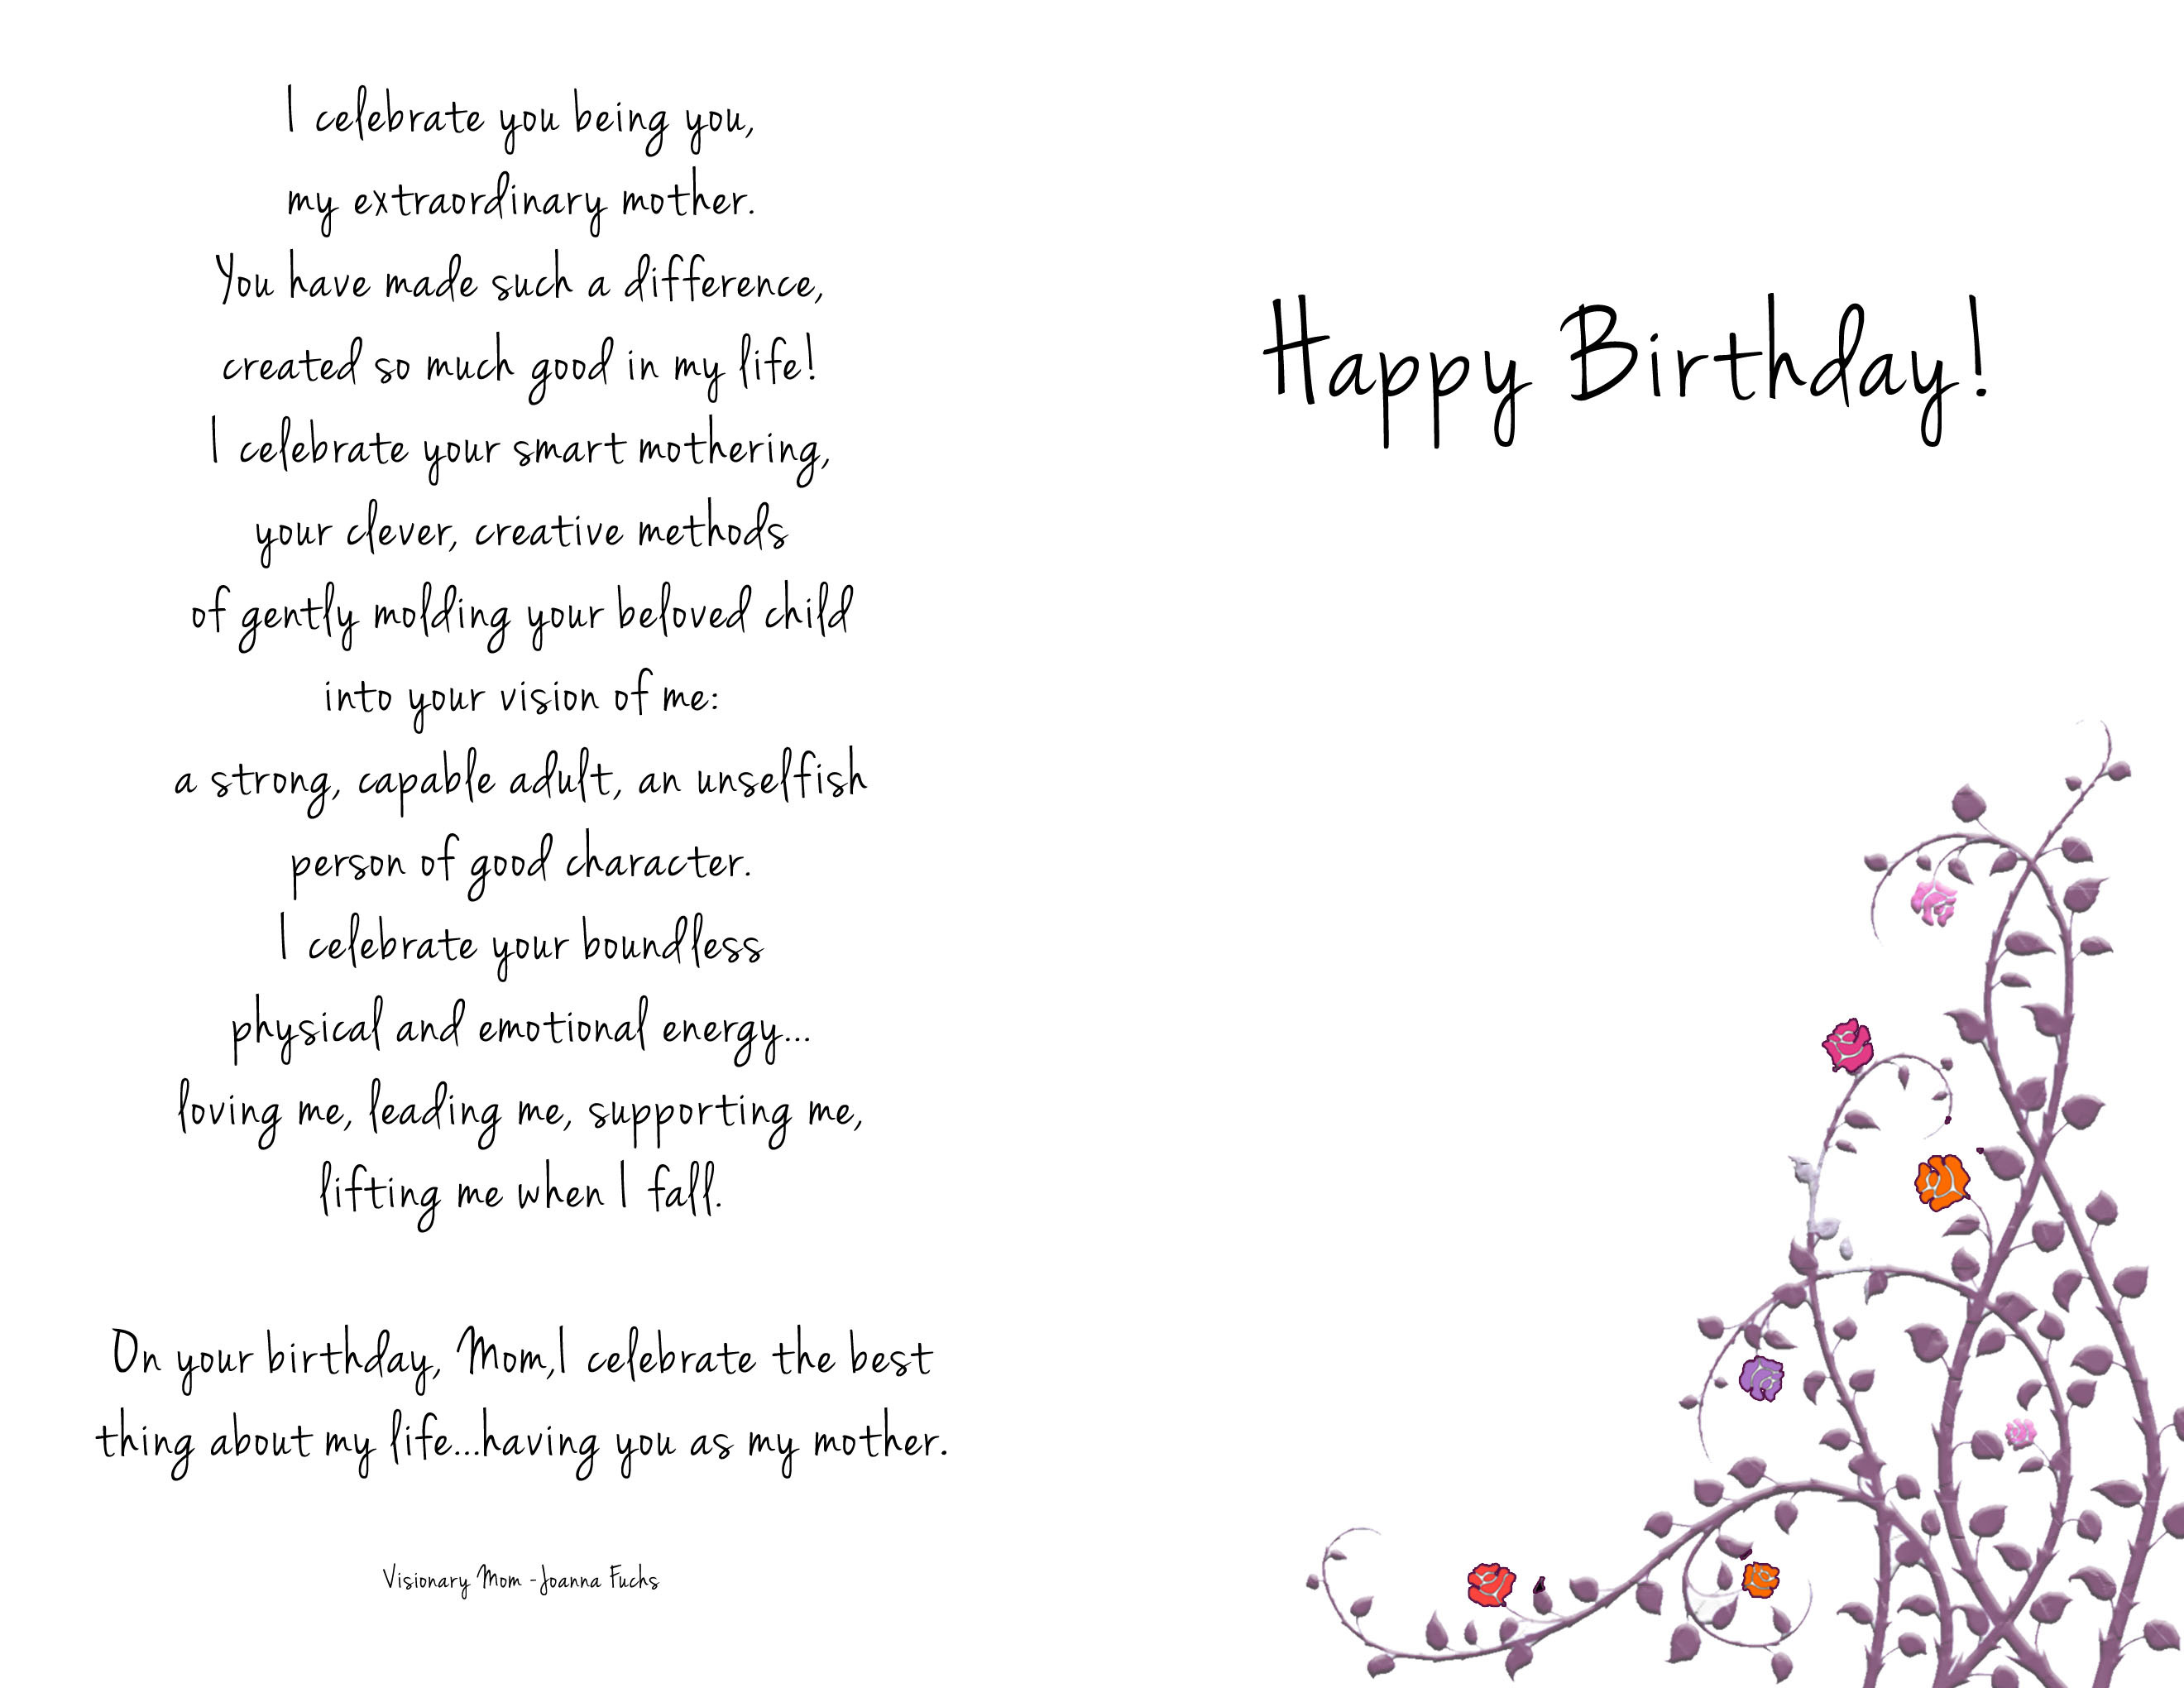 Mom Birthday Card Printable
 Happy Birthday Card – Corey Van Zandt